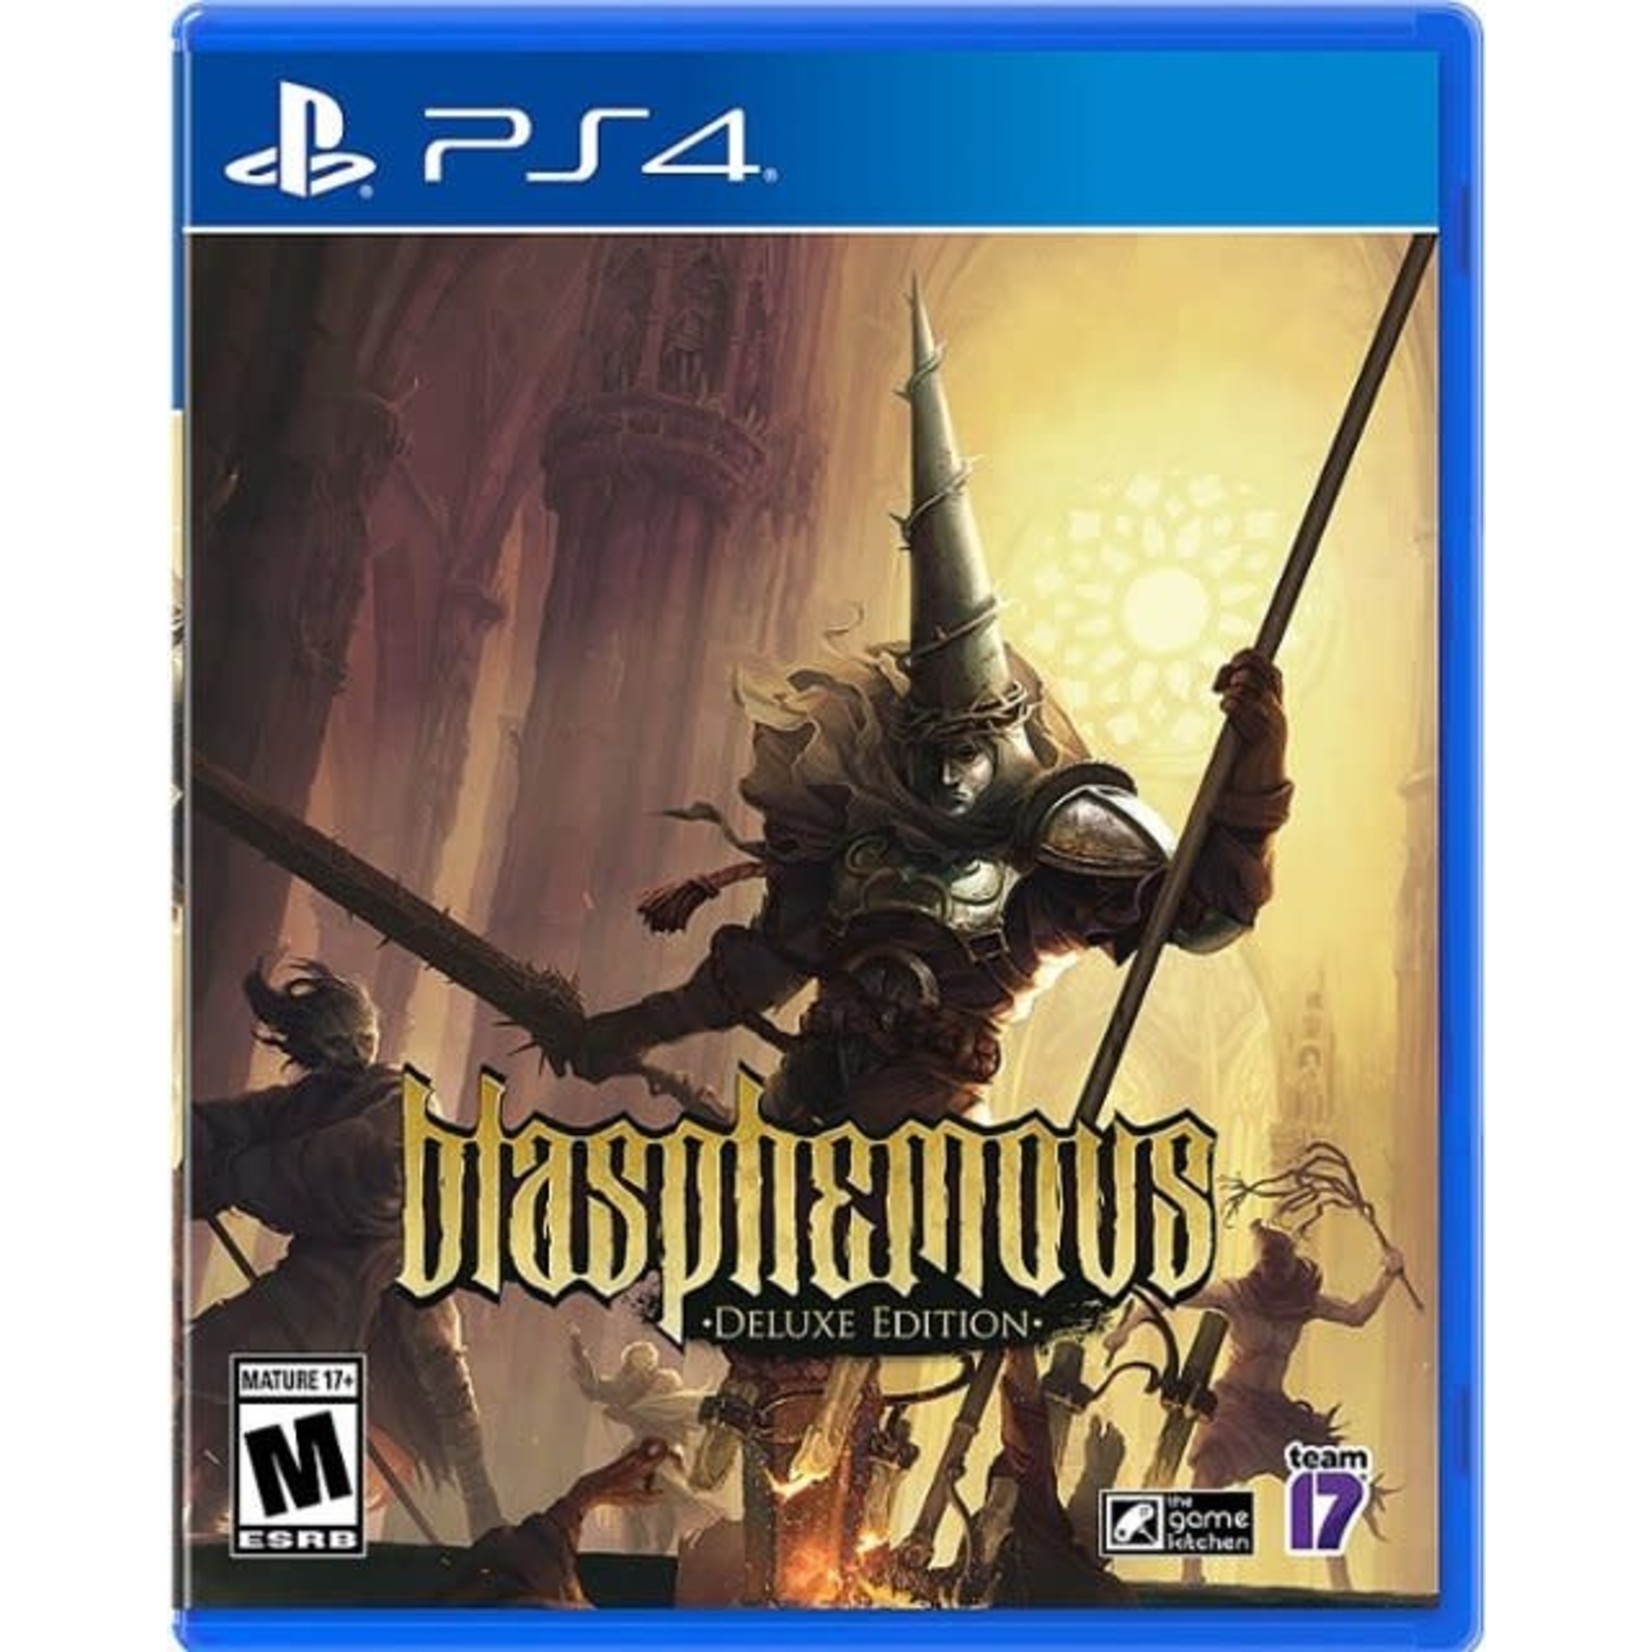 PS4-Blasphemous Deluxe Edition